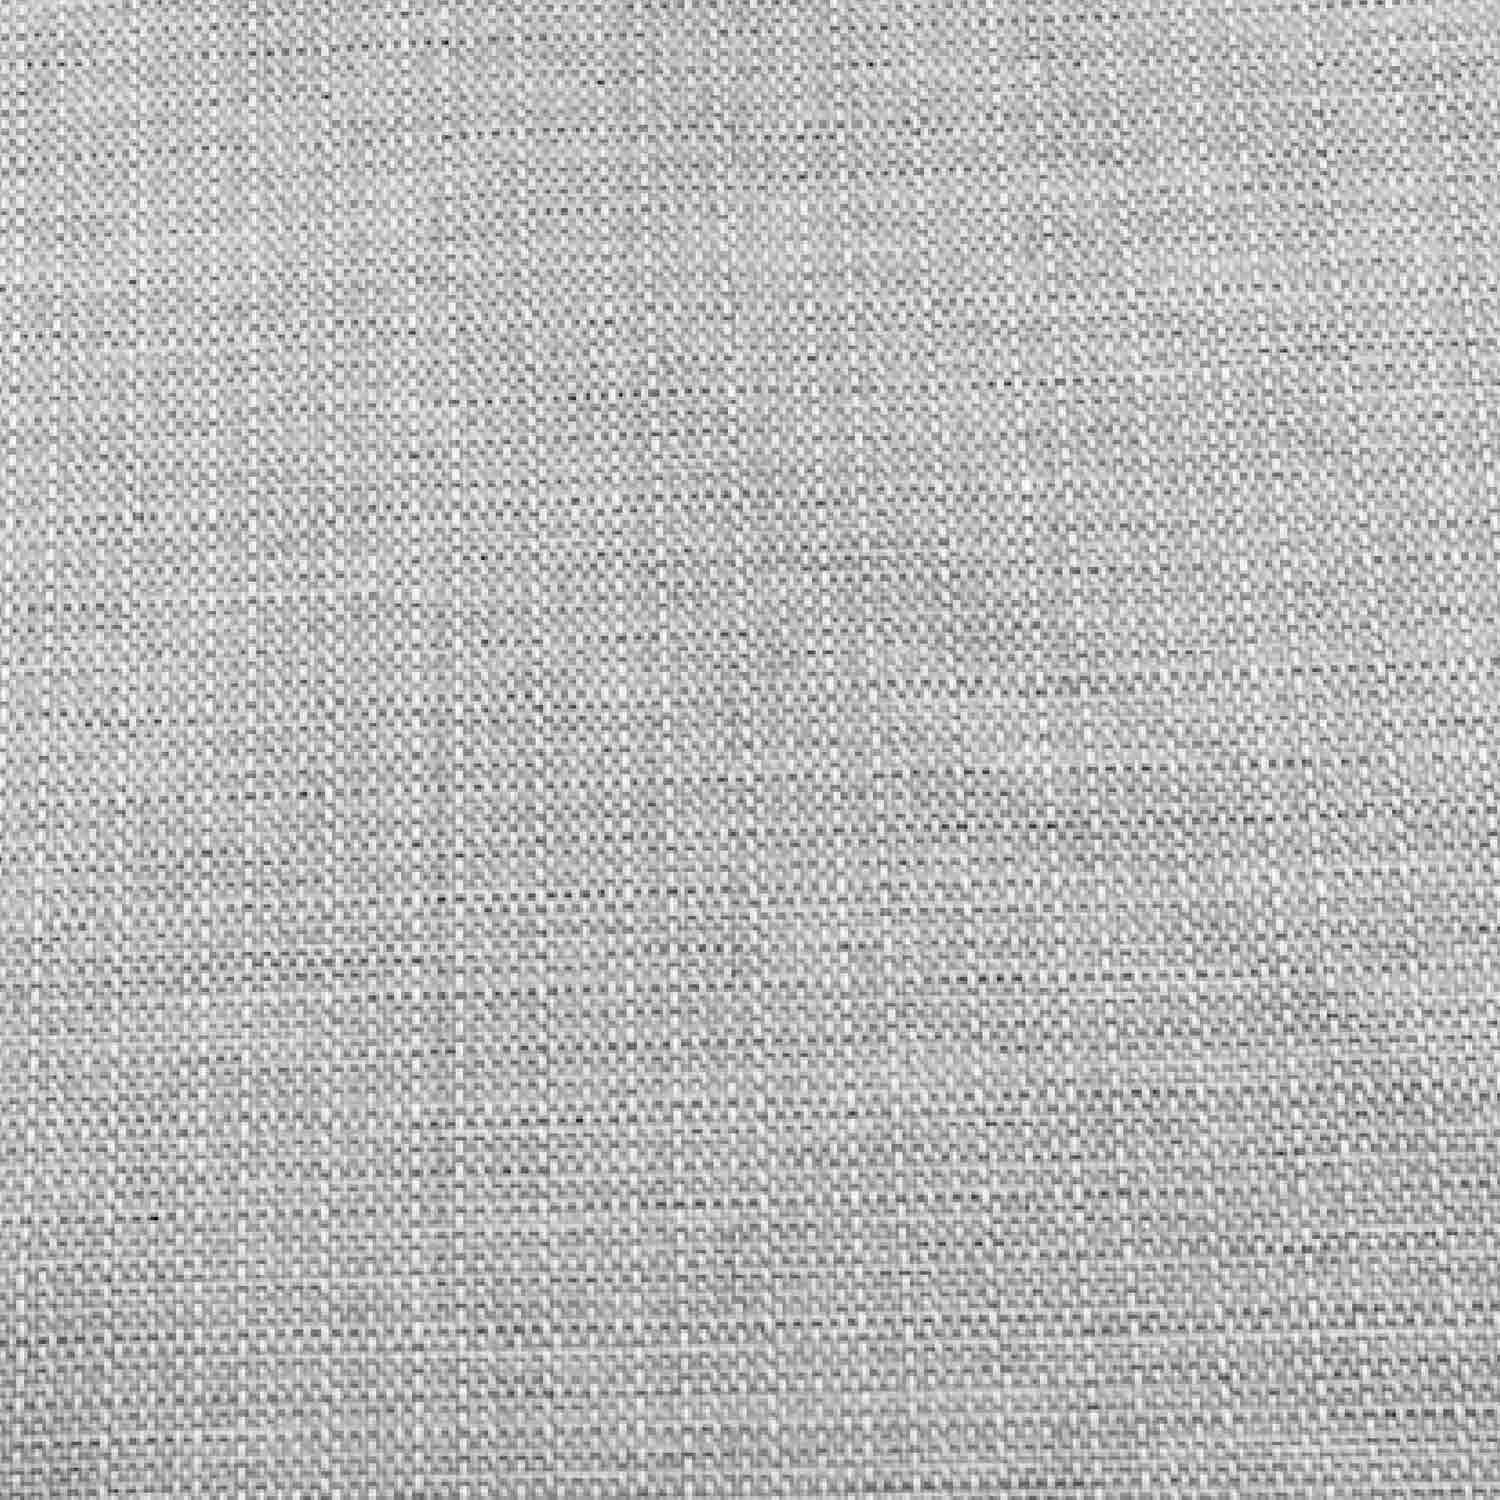 Hillsdale Sophia Tufted Backless Vanity Stool - White/Linen Gray Fabric